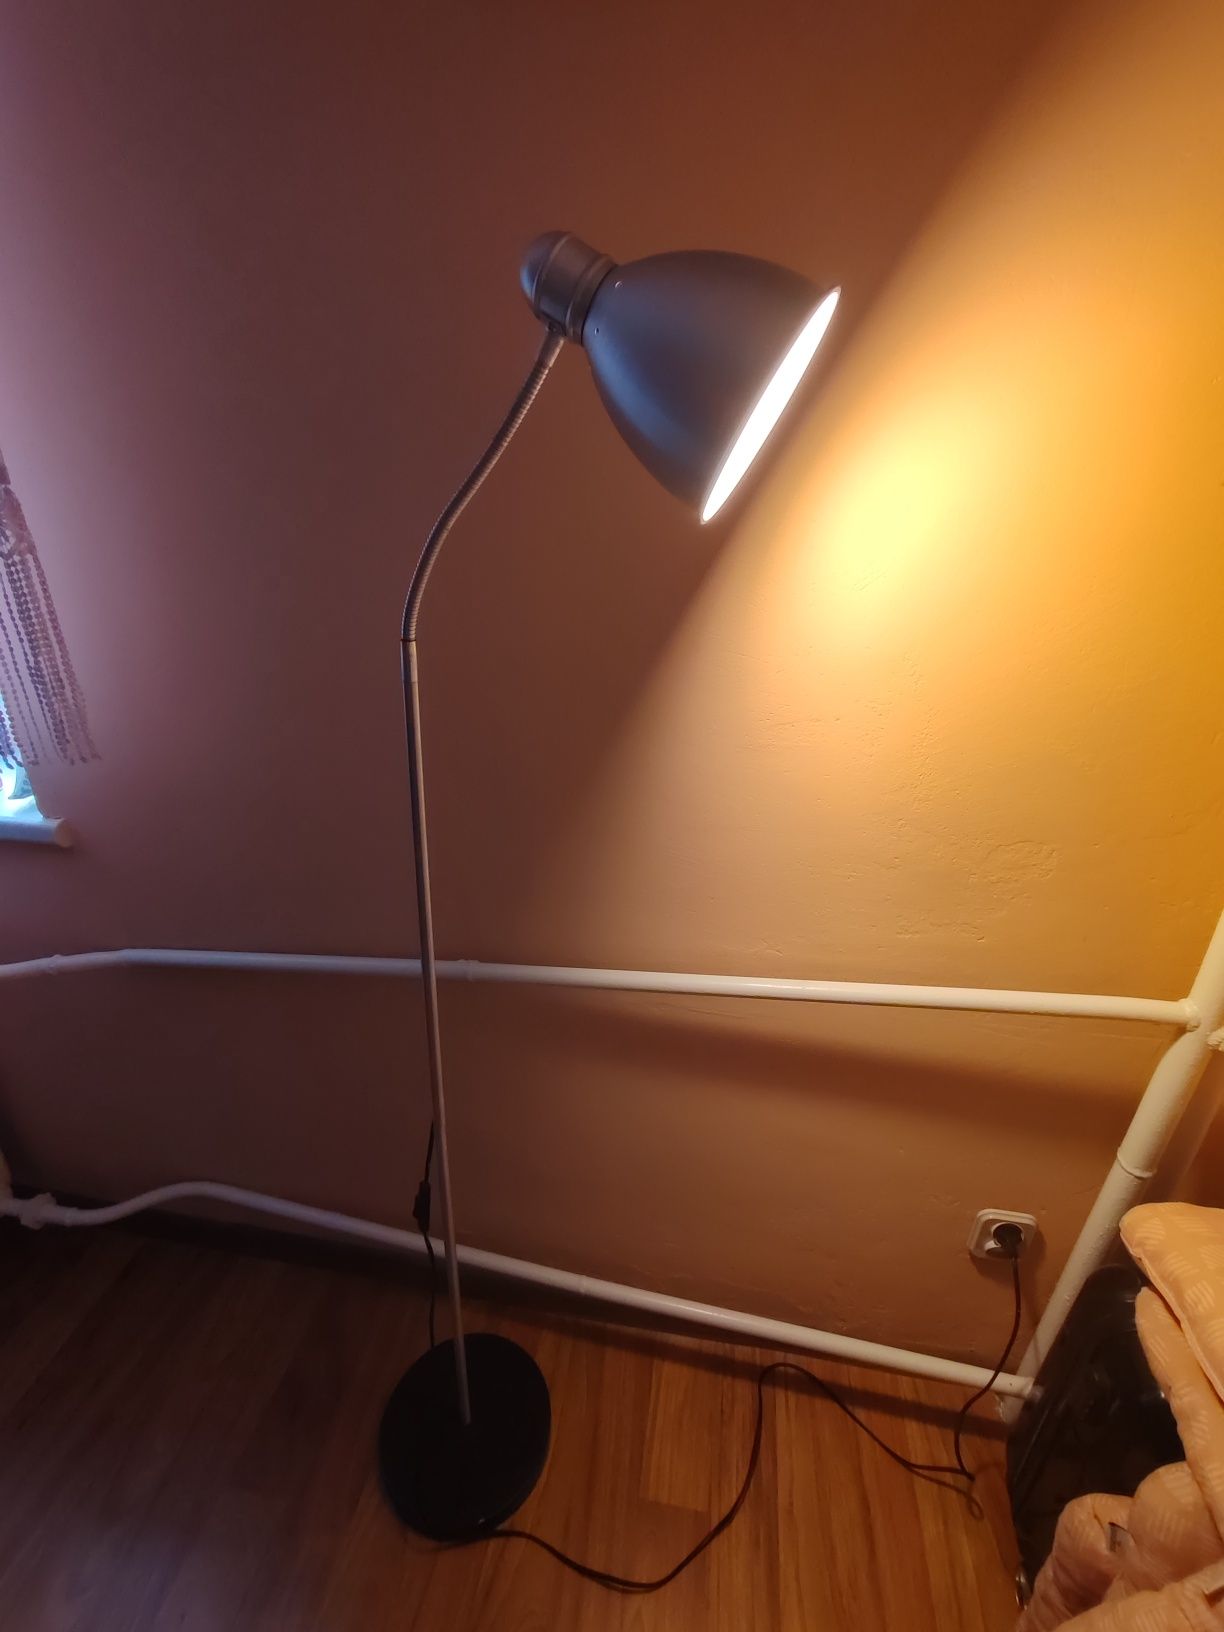 Lampa stojąca IKEA